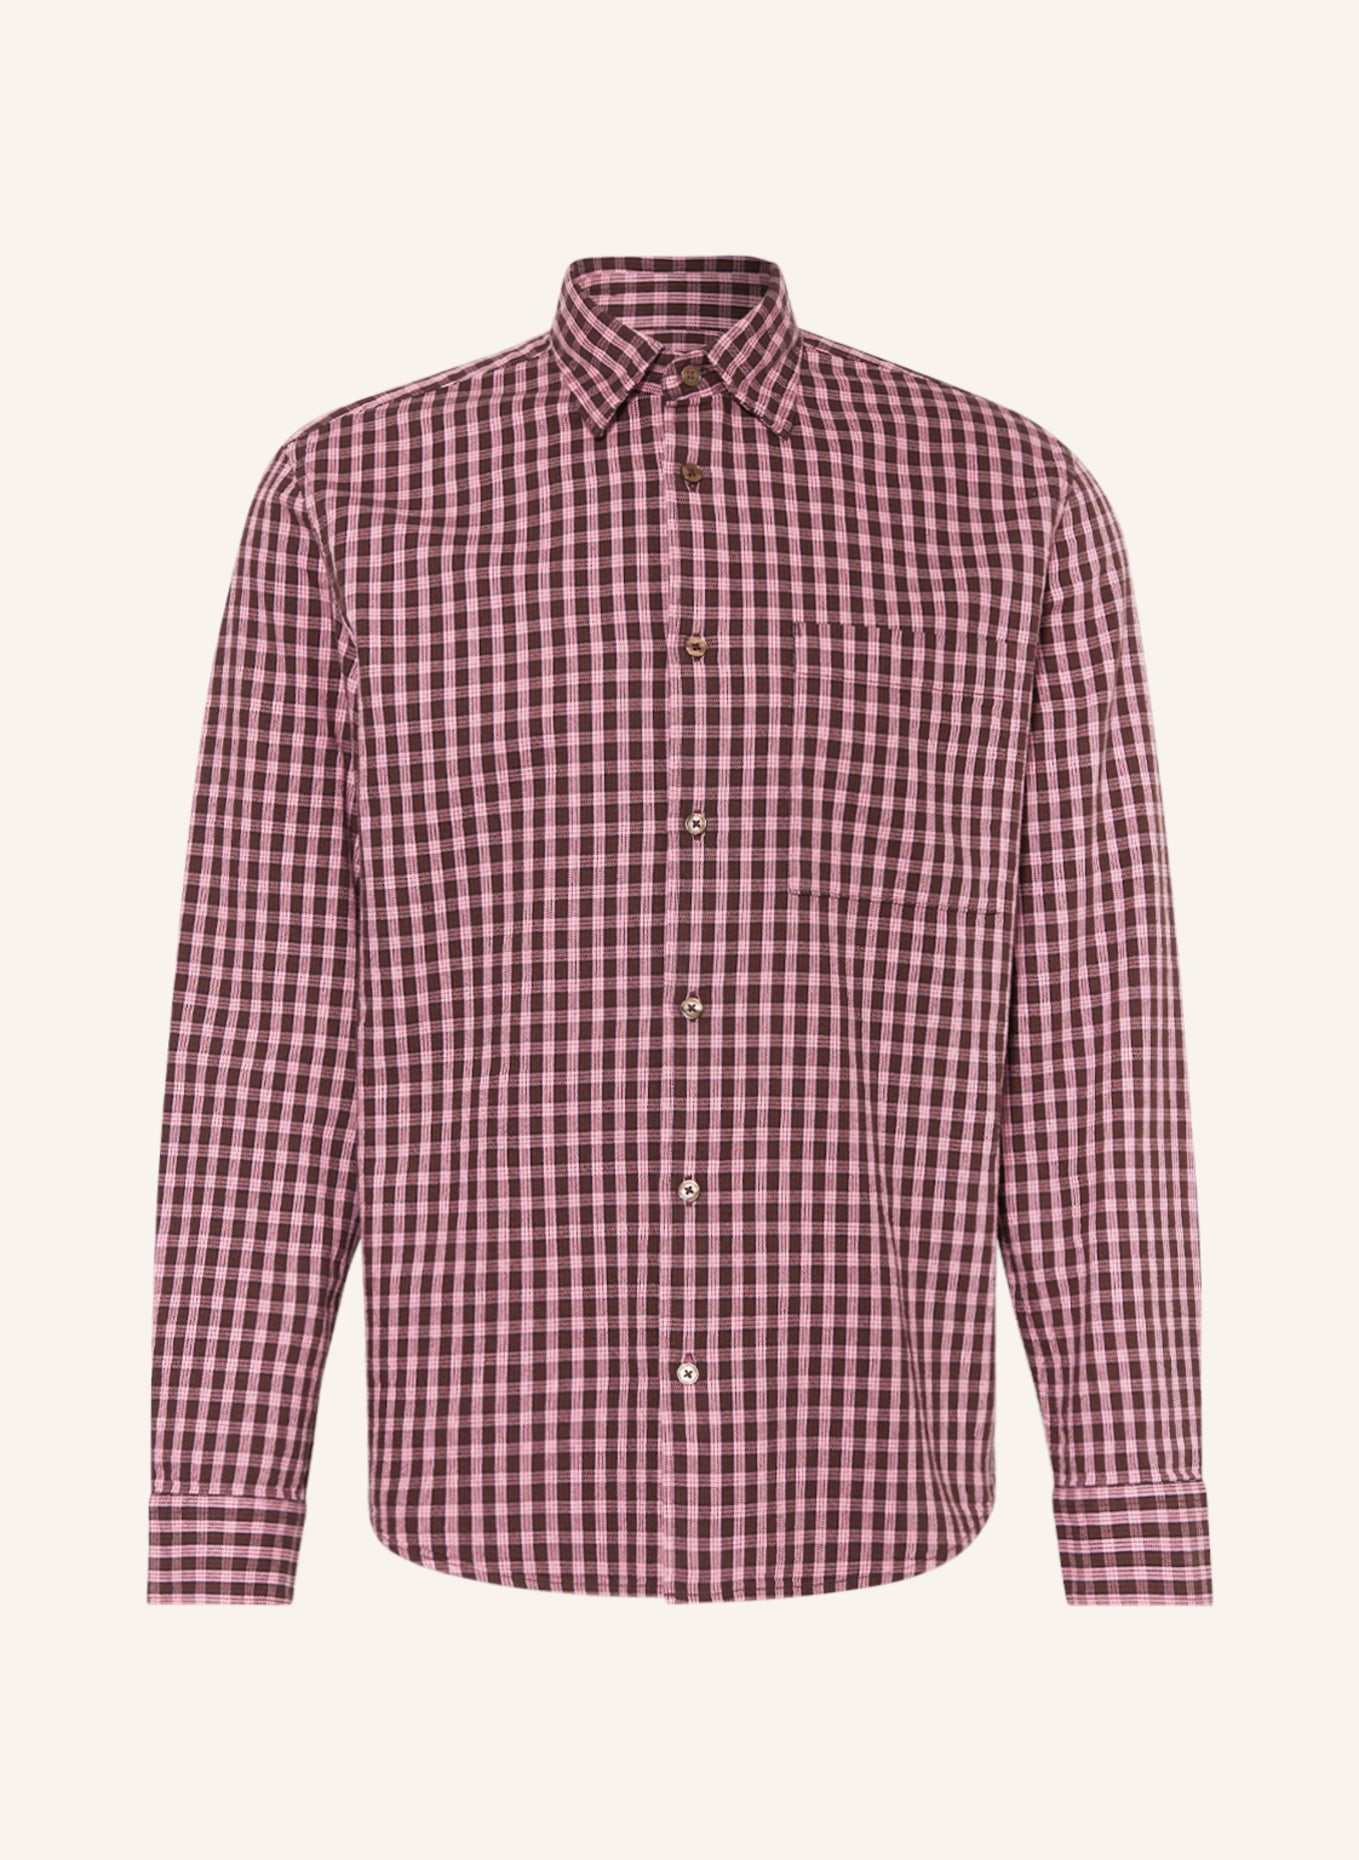 Marc O'Polo Hemd Regular Fit, Farbe: DUNKELBRAUN/ SCHWARZ/ ROSA (Bild 1)